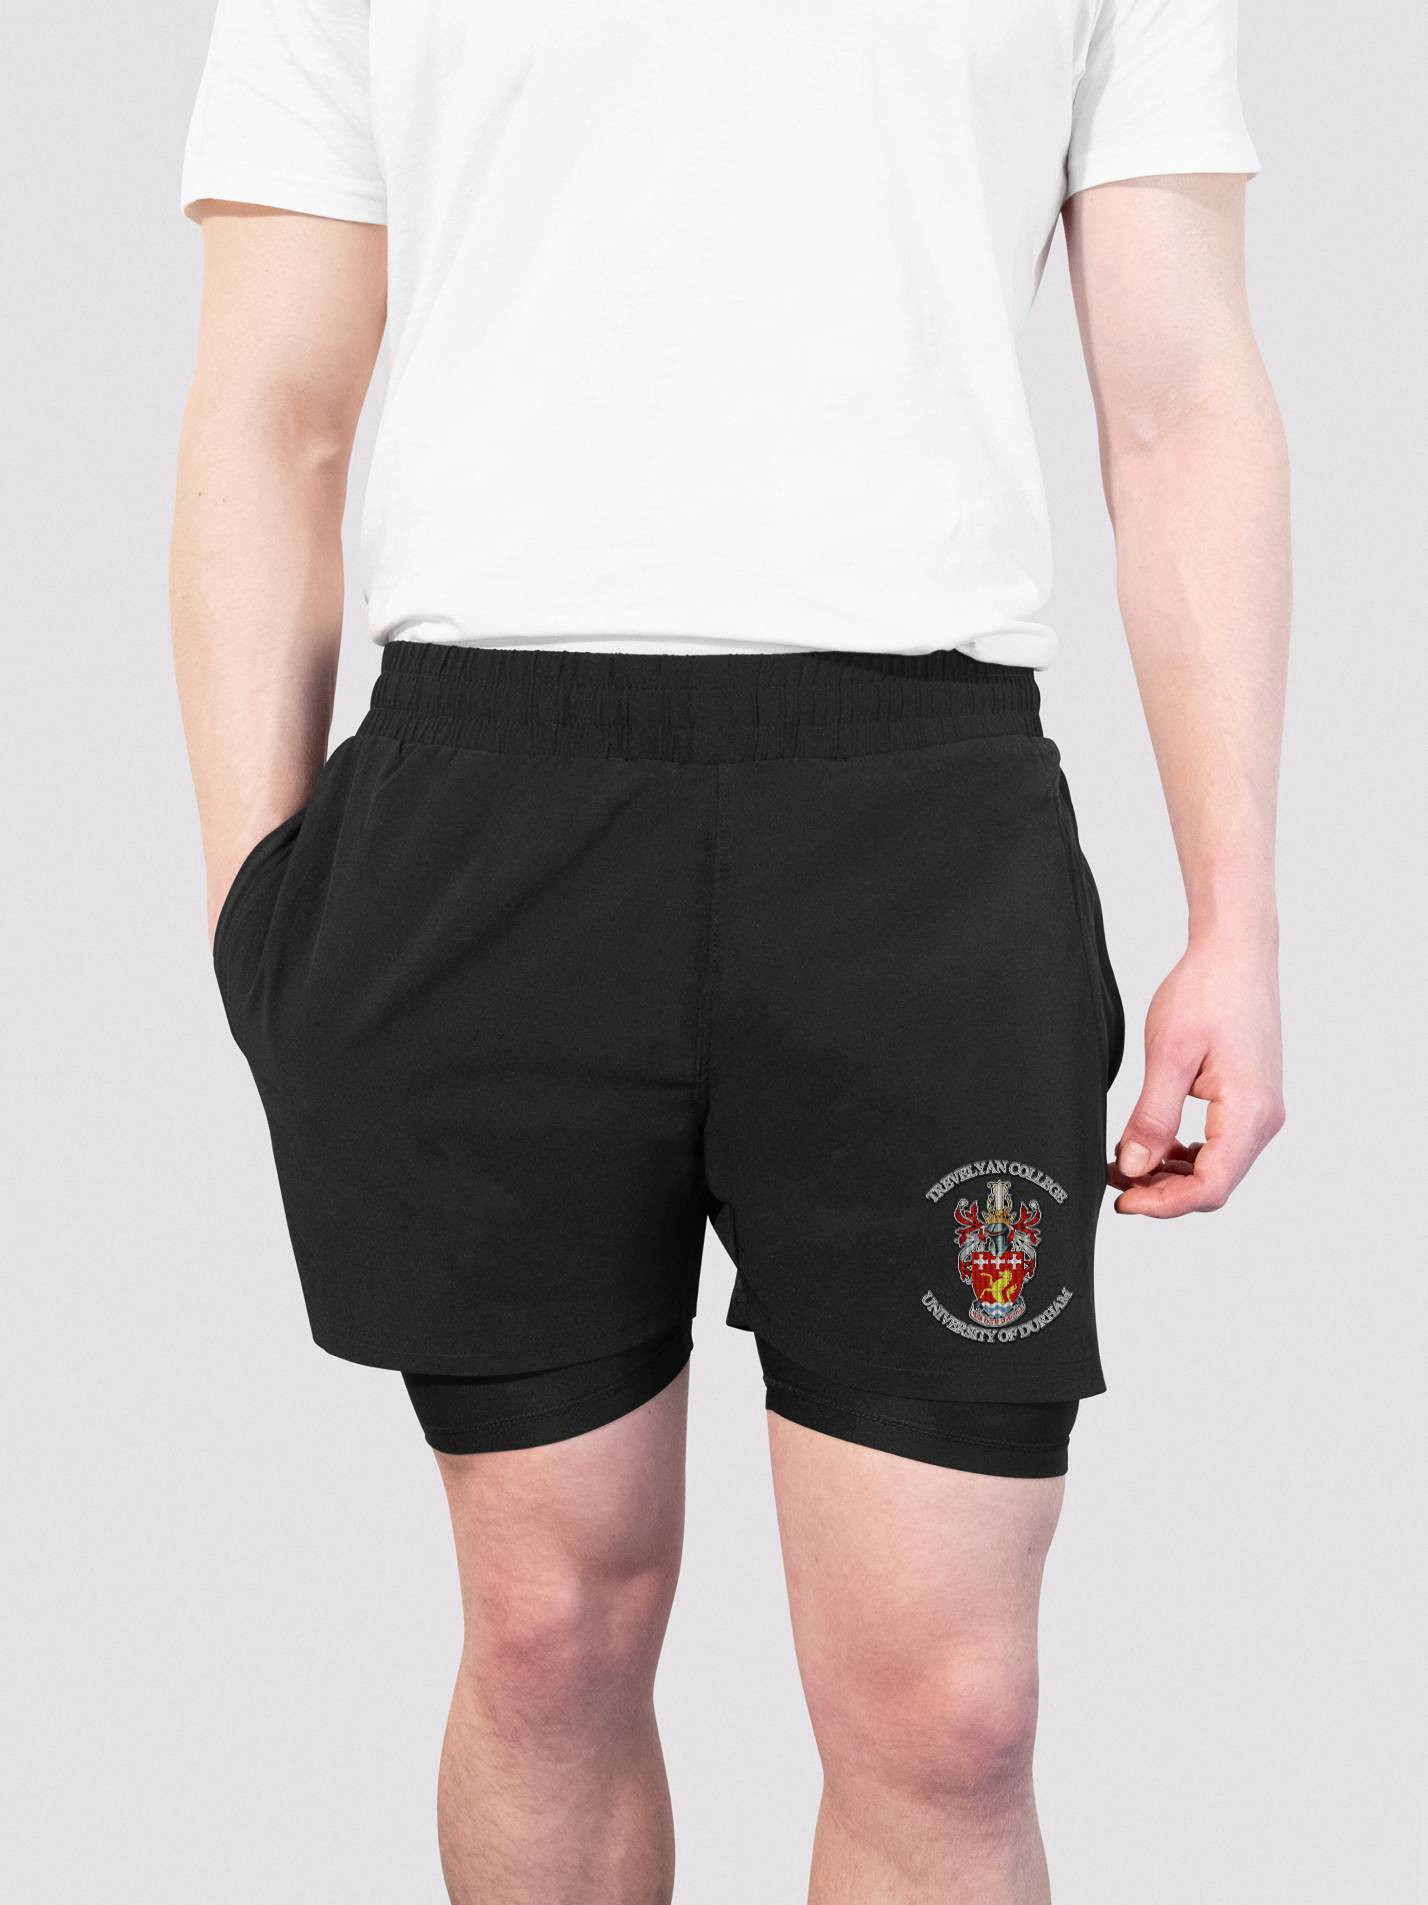 Trevelyan College Durham Dual Layer Sports Shorts